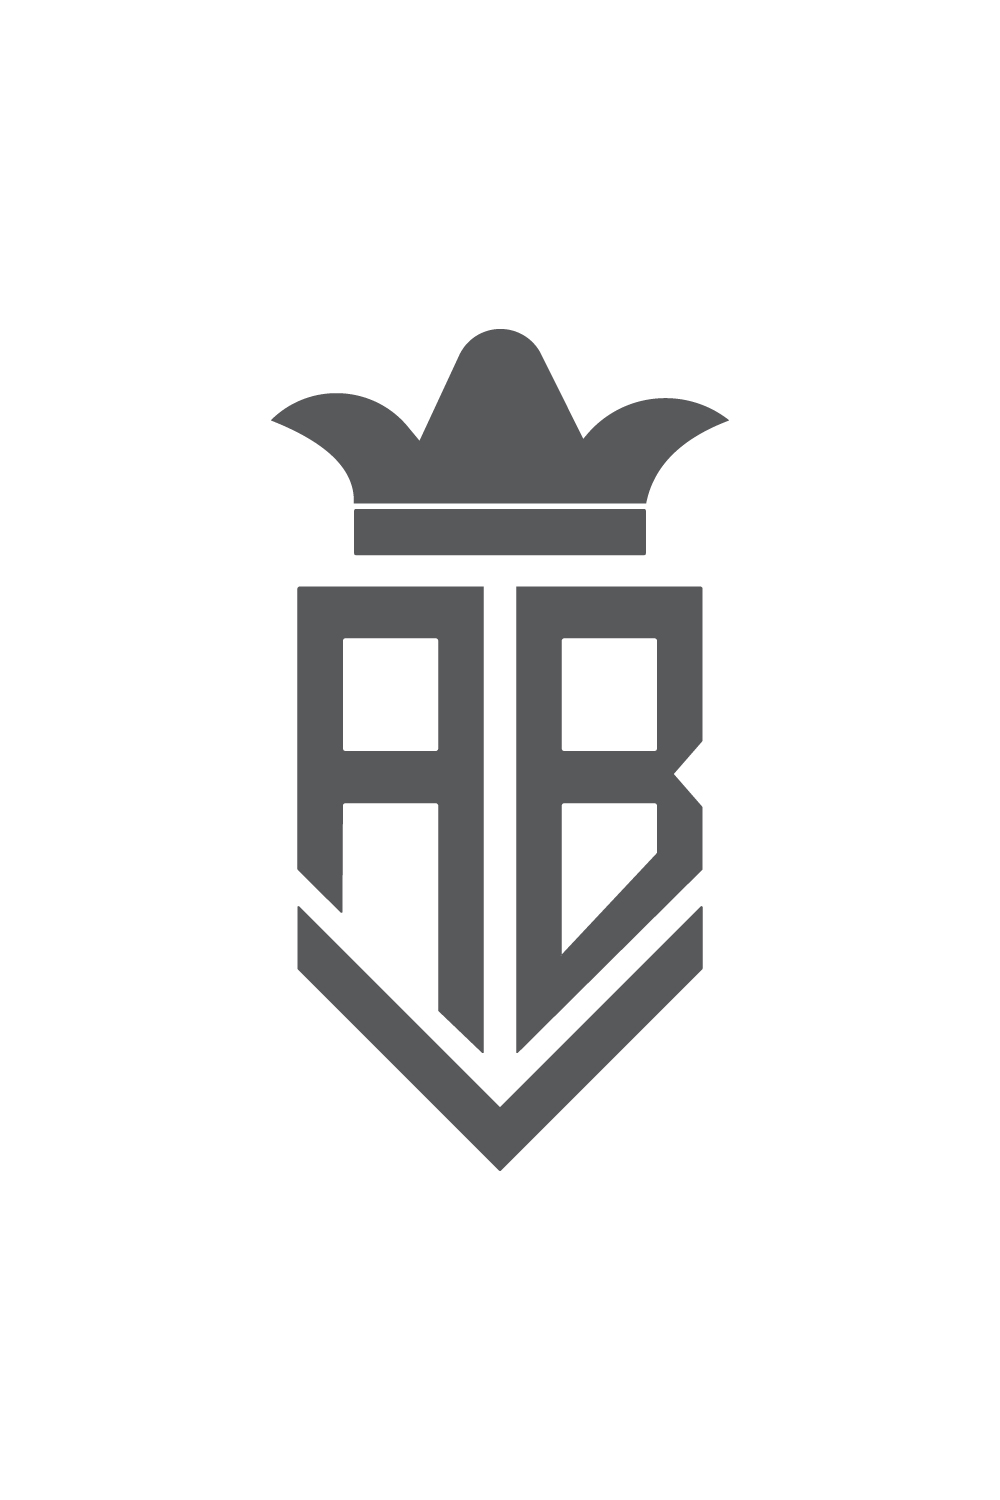 Luxury AB Letters logo design Luxury Crown AB logo design vector images, BA black color icon pinterest preview image.